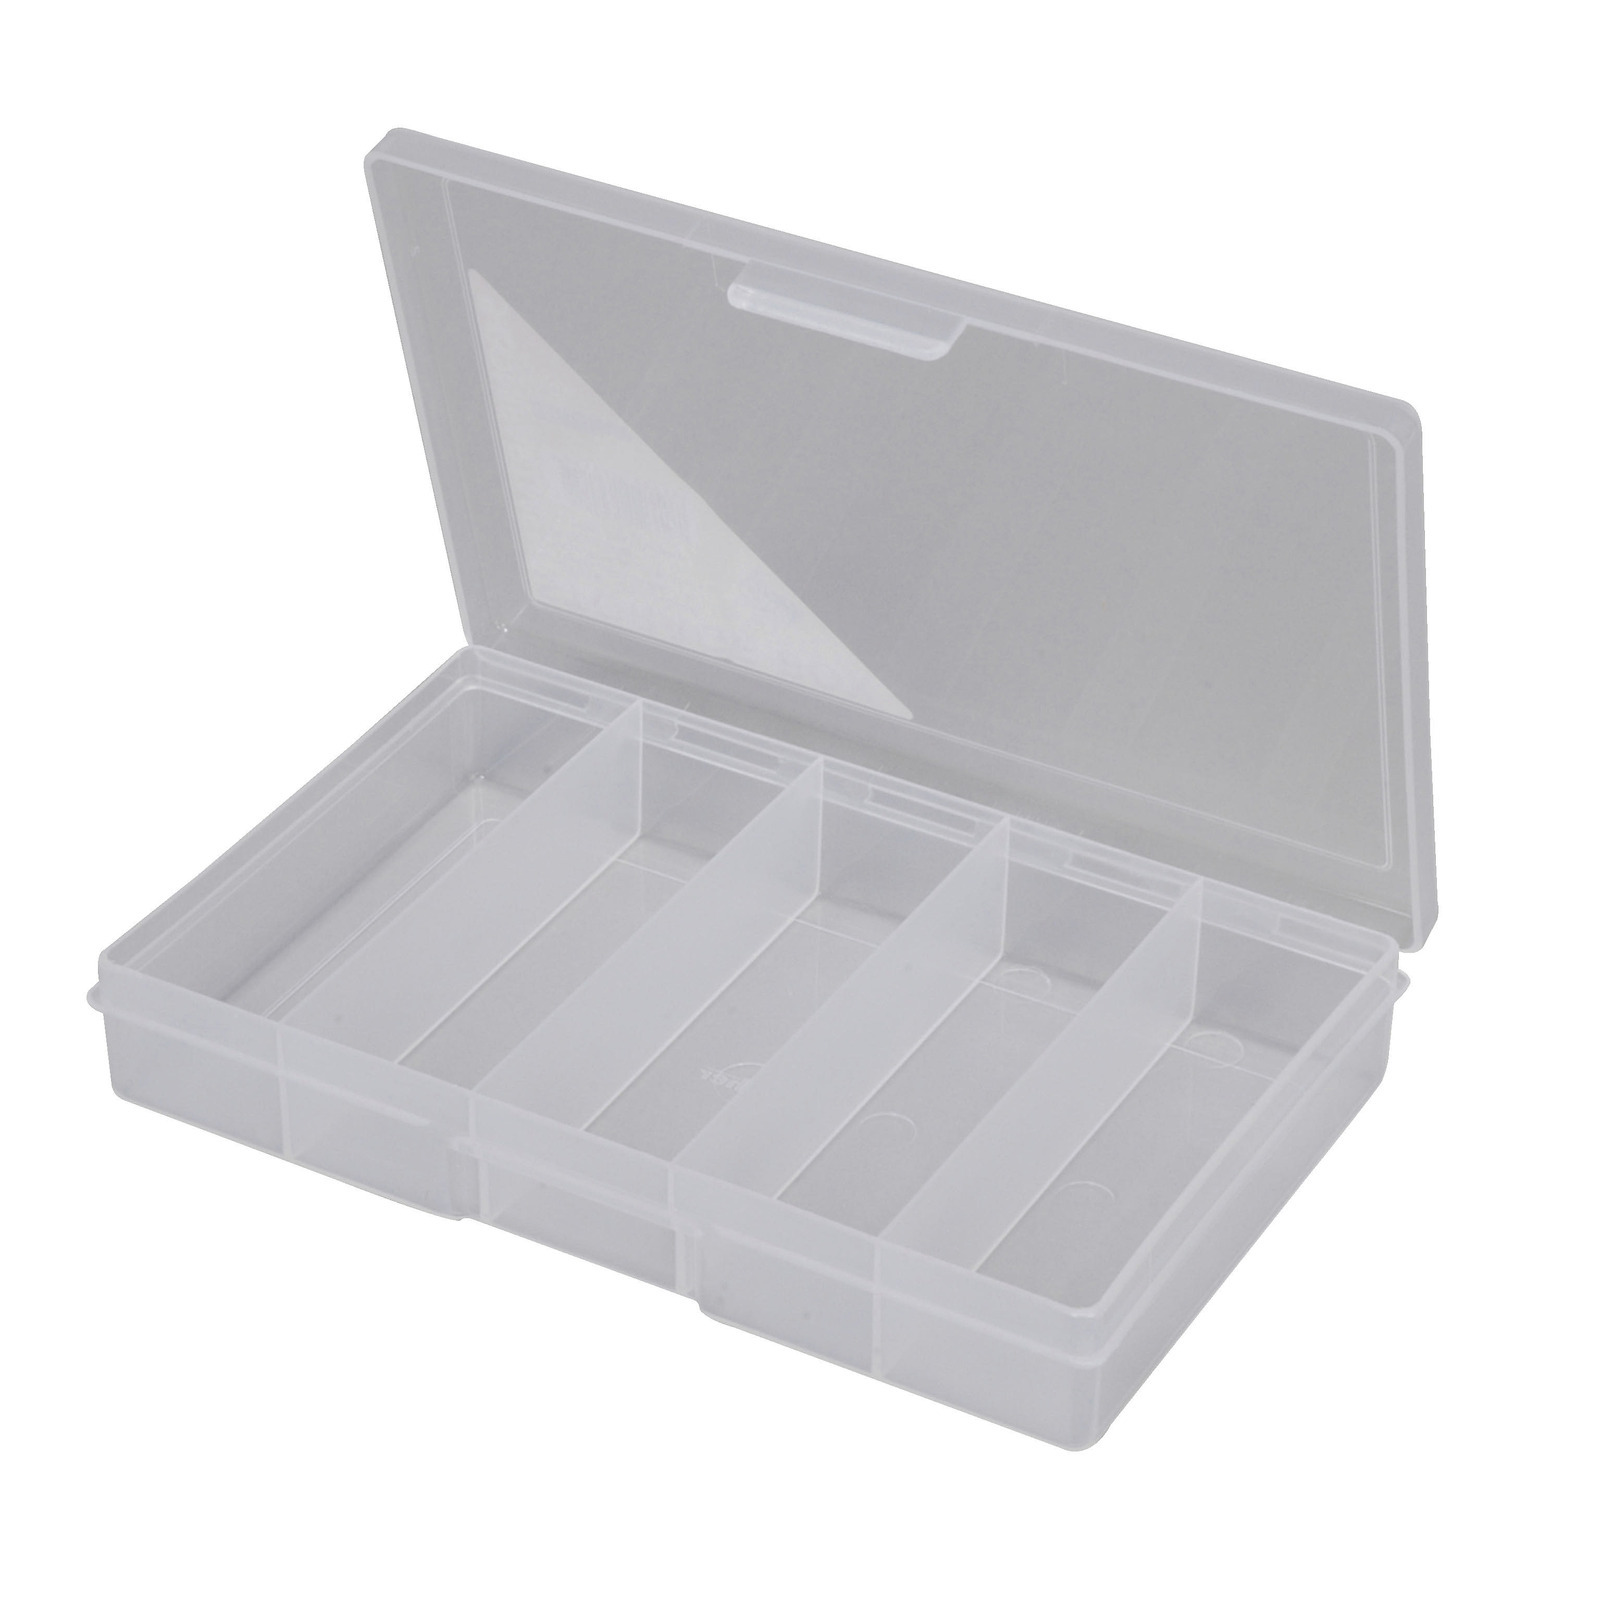 Accessory Boxes    -Small (5 compartments)